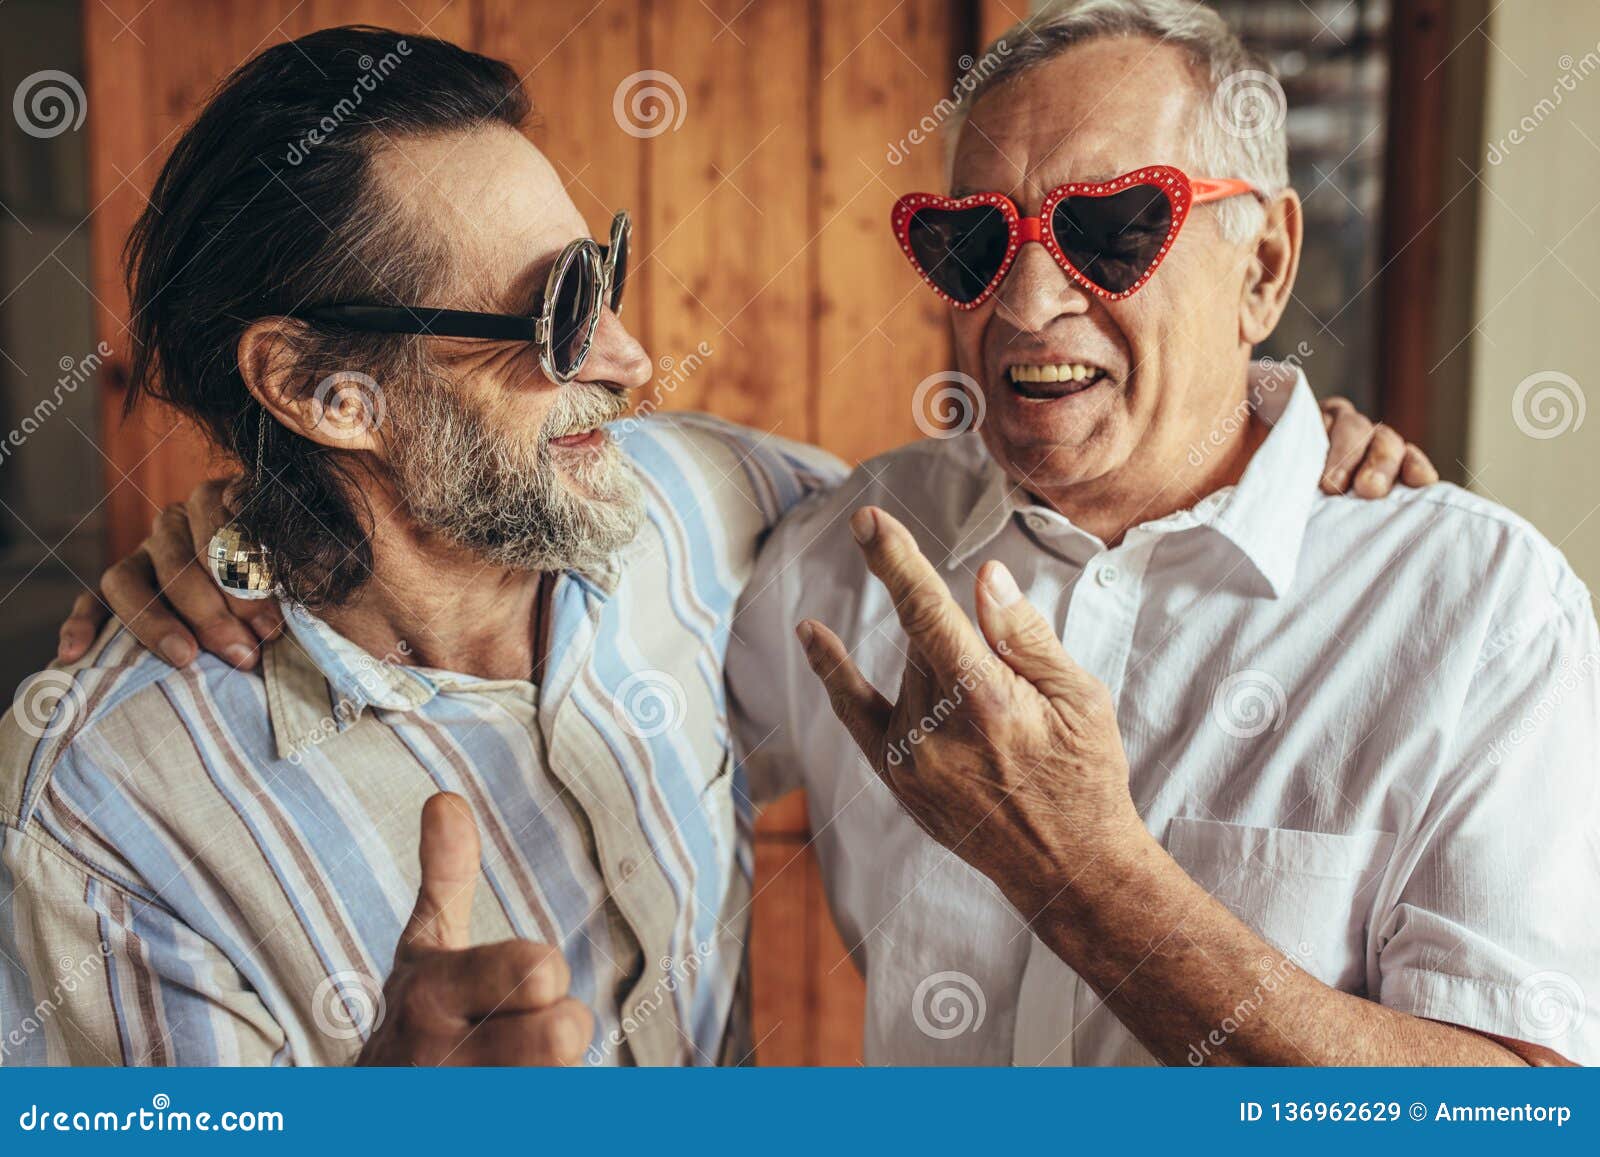 Elderly Friends with Crazy Eyewear Having Fun Stock Image - Image of beard,  gray: 136962629